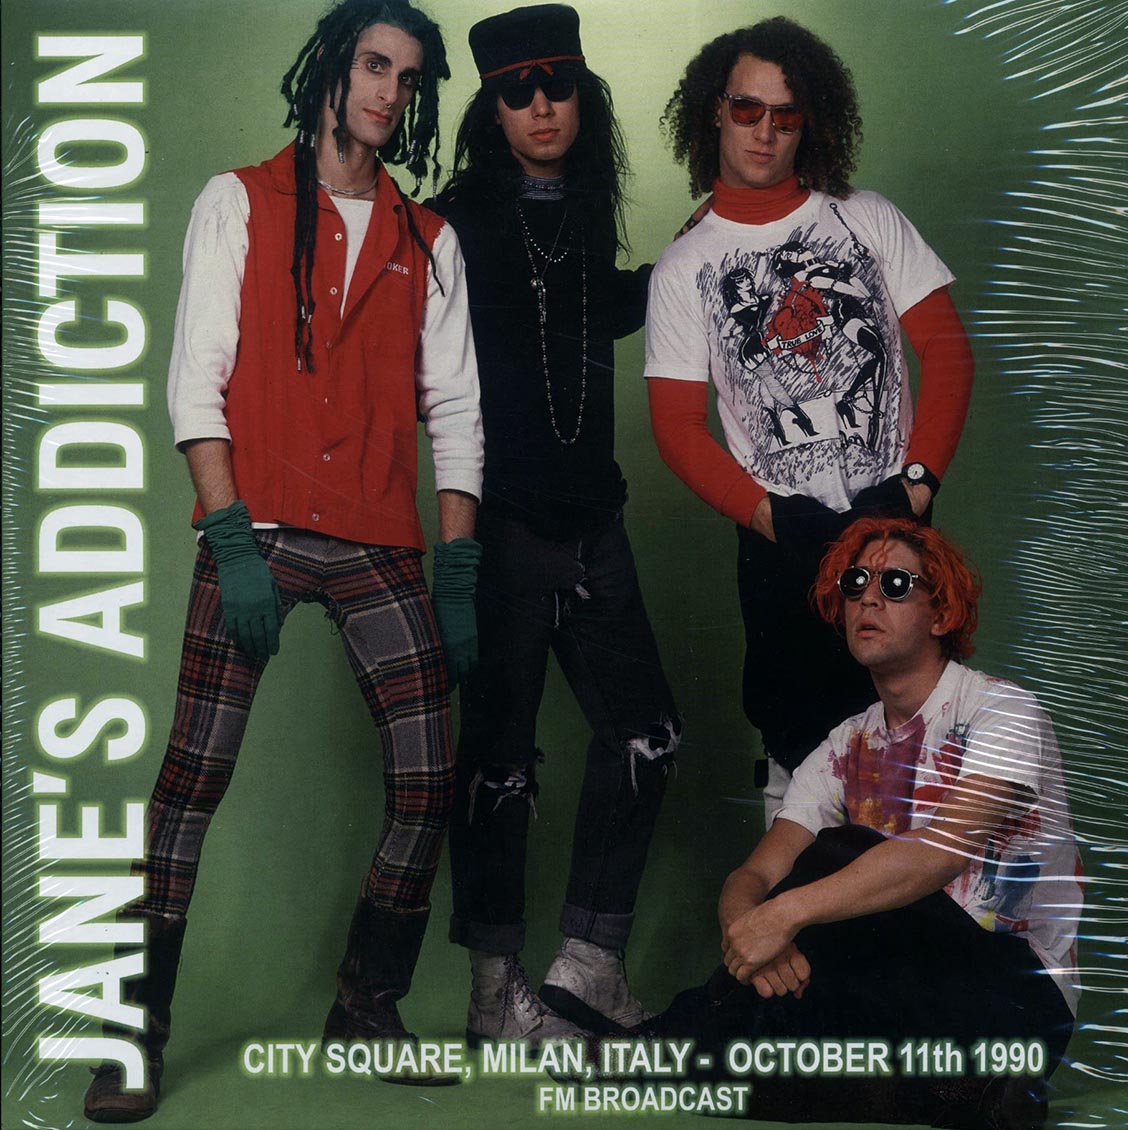 Jane's Addiction - City Square, Milan, Italy, October 11th 1990 FM Broadcast (ltd. 500 copies made) - Vinyl LP